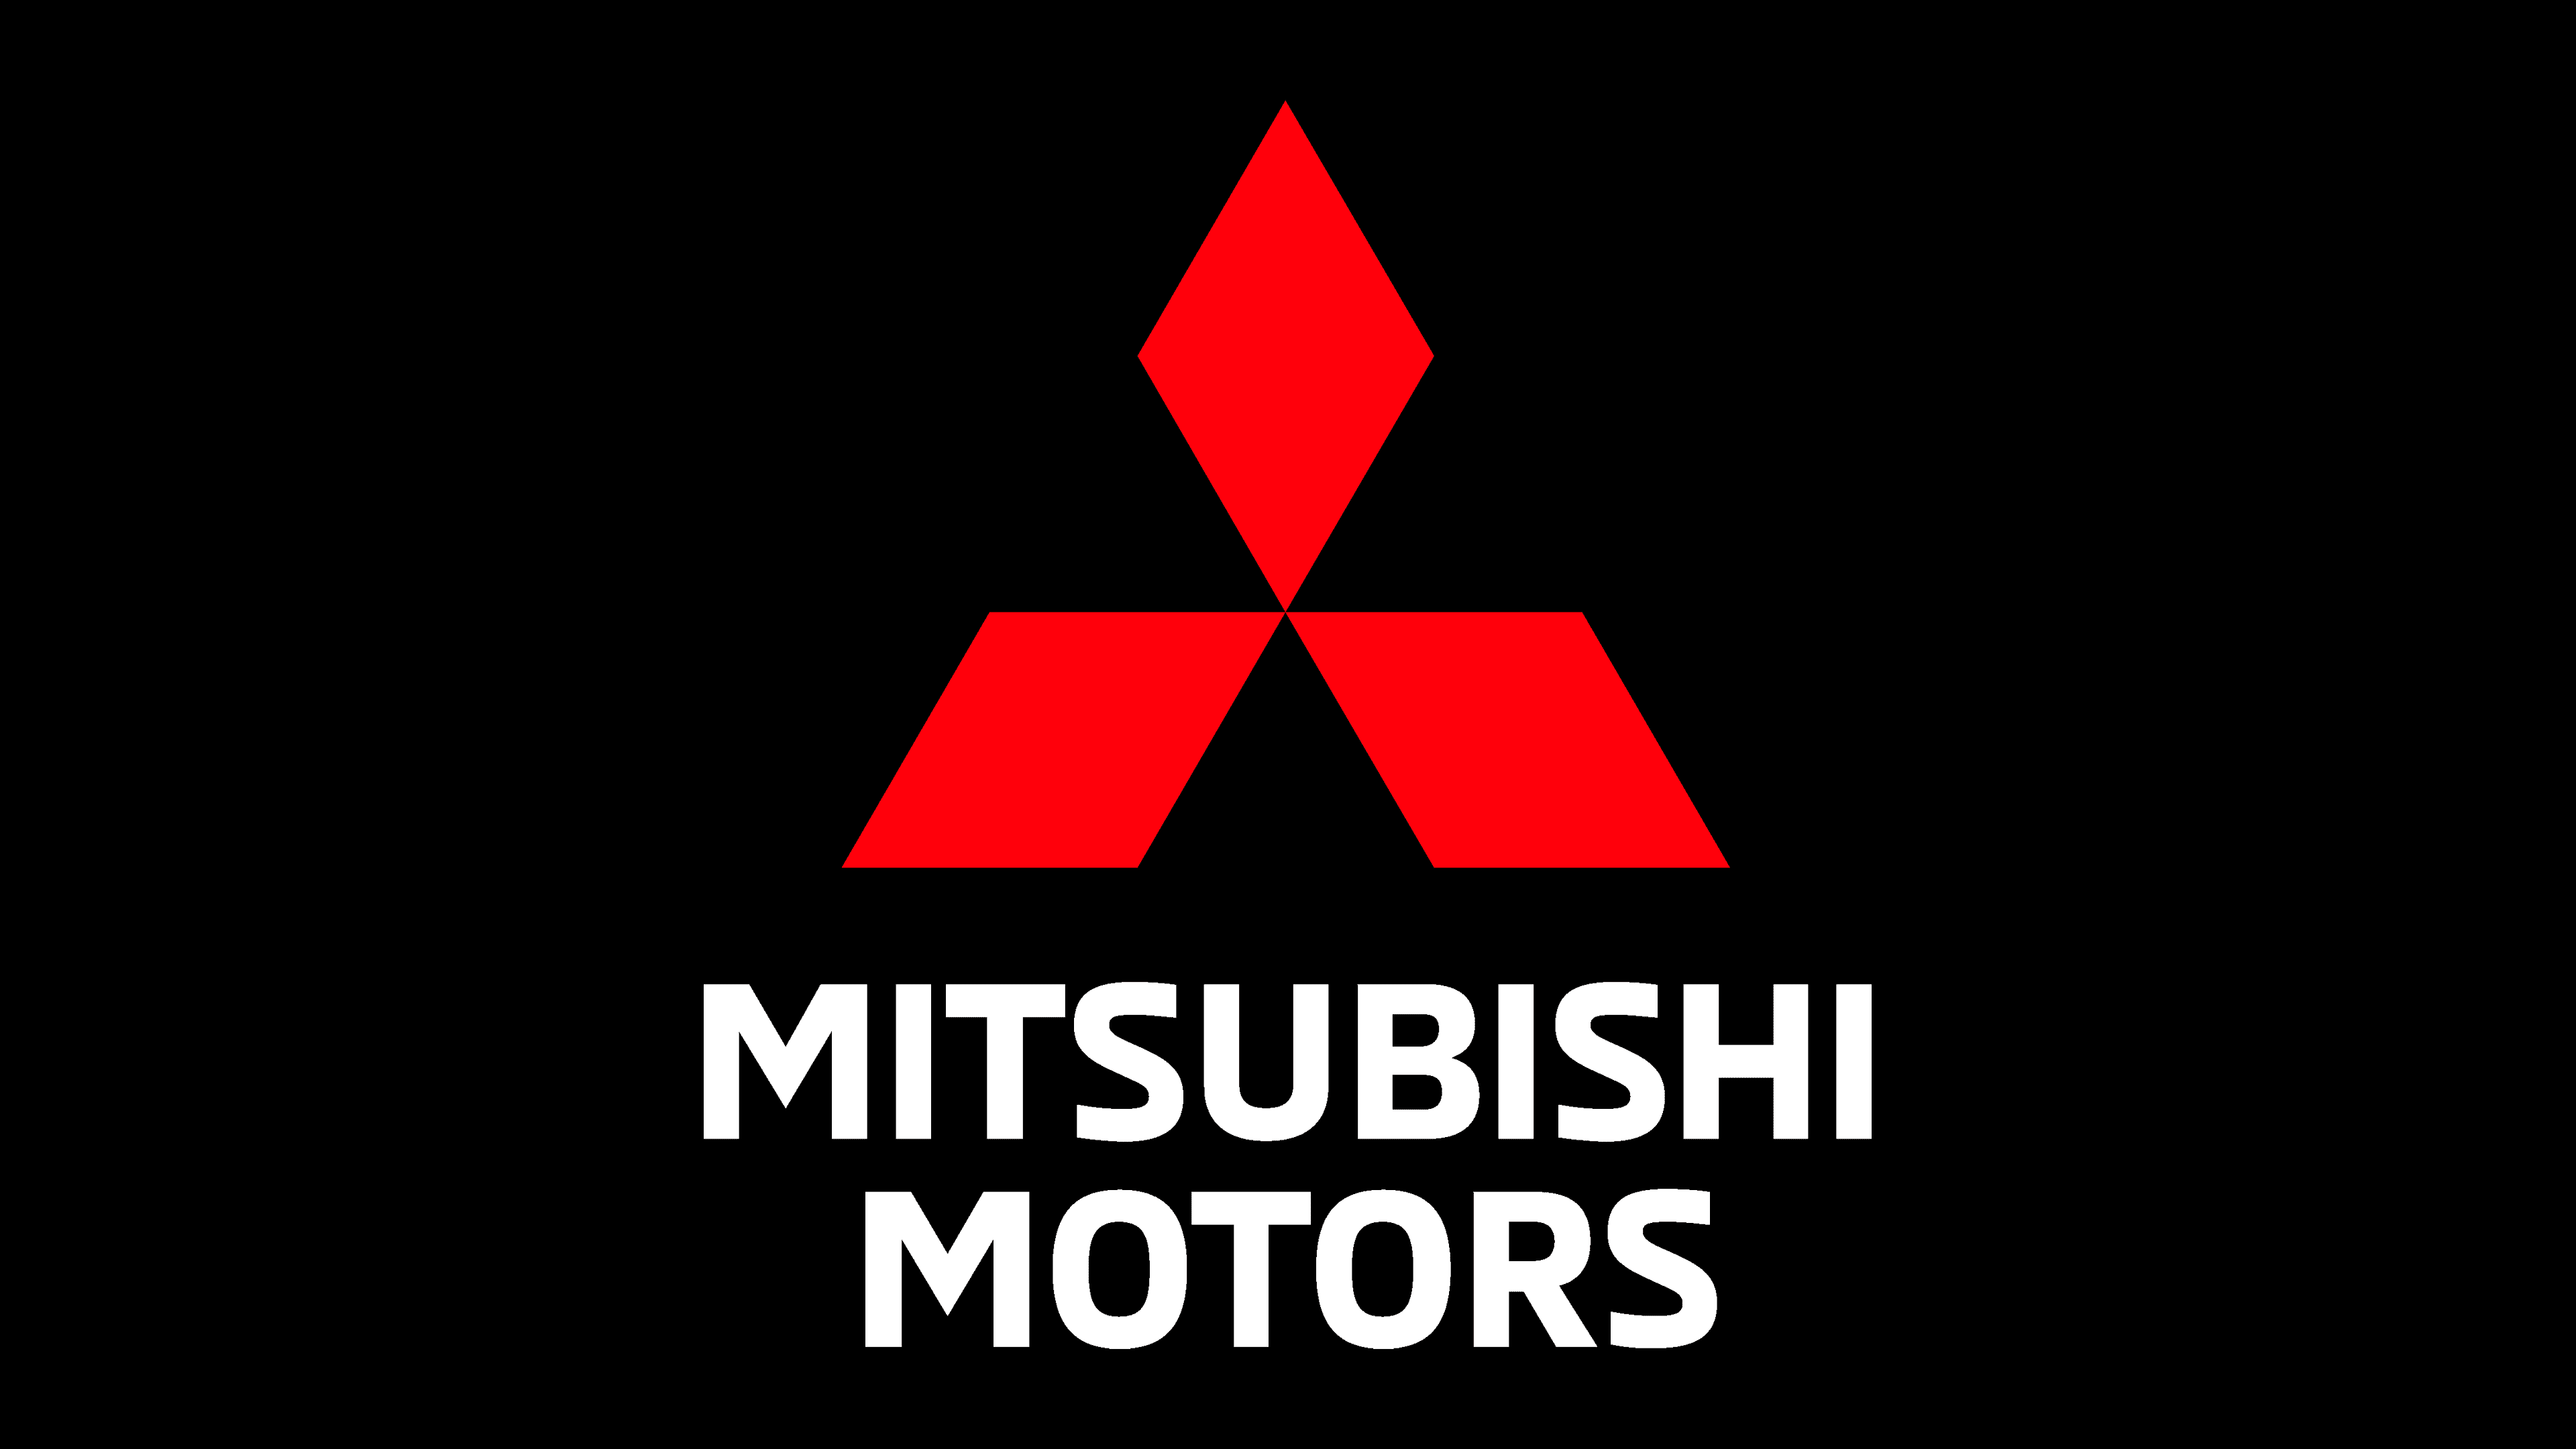 ABS Plastic EVOLUTION 3D Logo Car Rear Bumper Trunk Letter Emblem Stickers  Badge Decals For Mitsubishi Lancer From Rzap, $6.64 | DHgate.Com